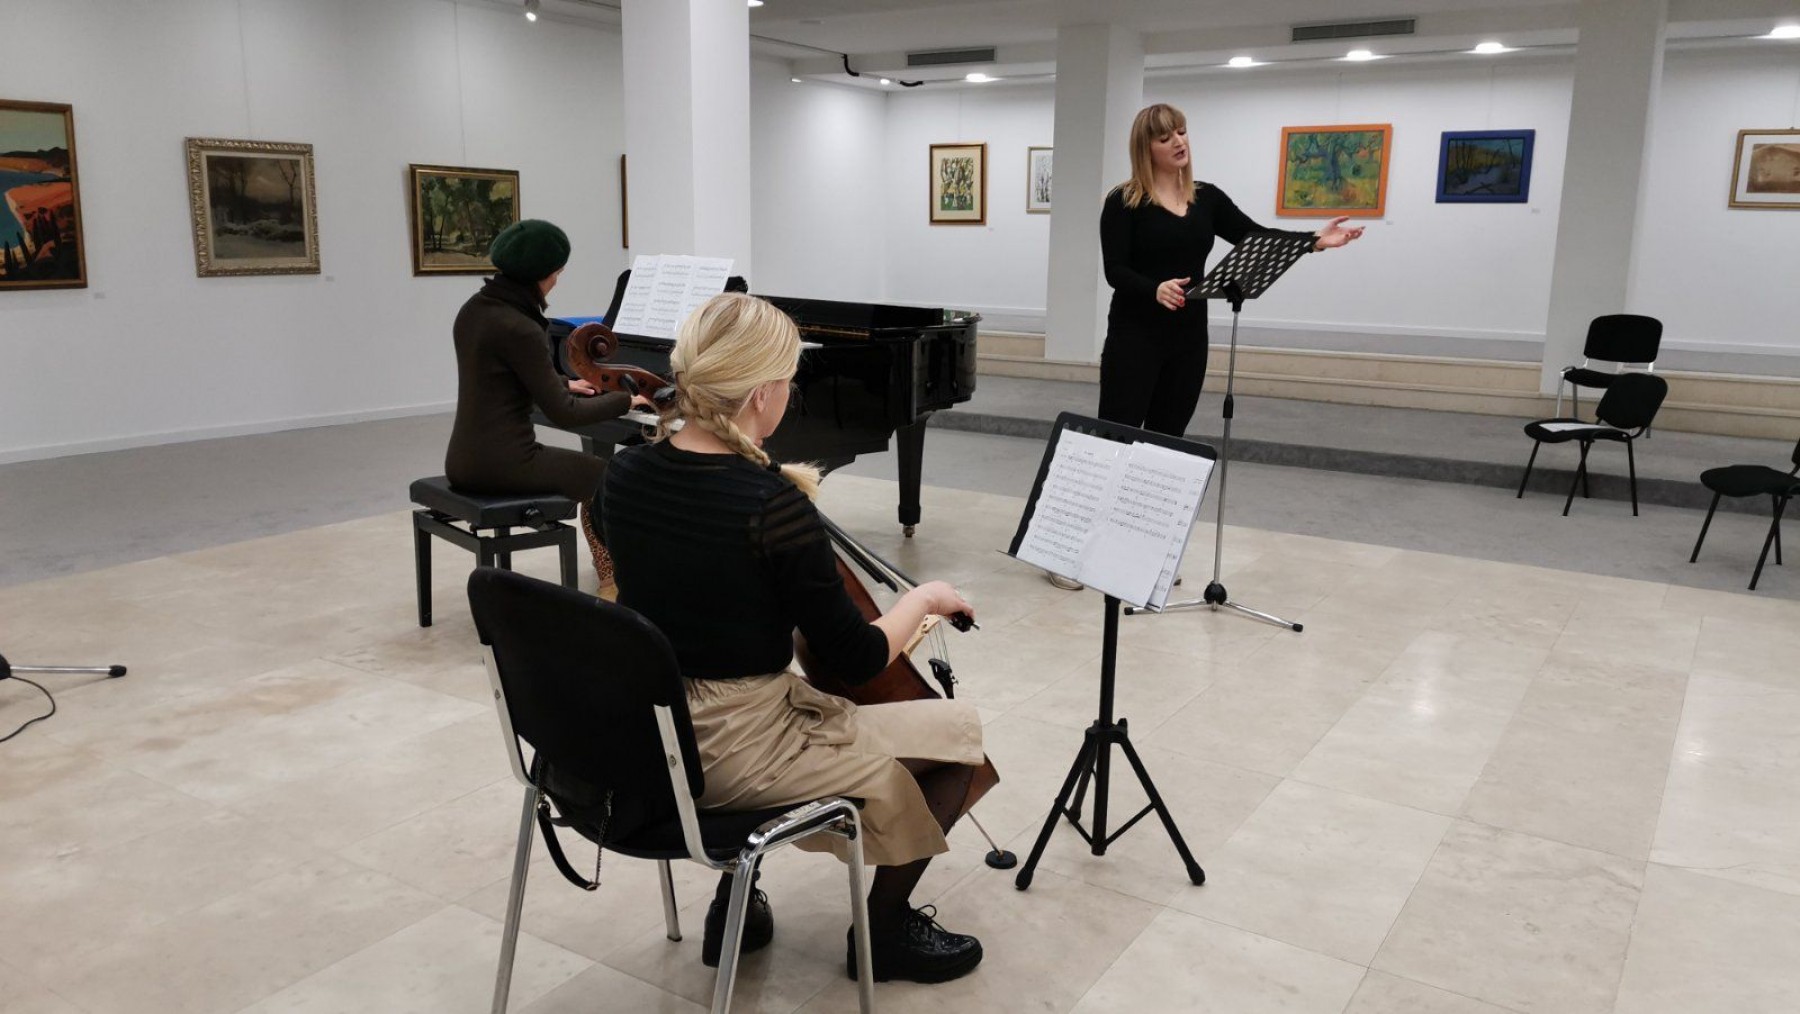 Napretkov tjedan kulture otvara trio 'Senso' s najljepšim notama klasične glazbe